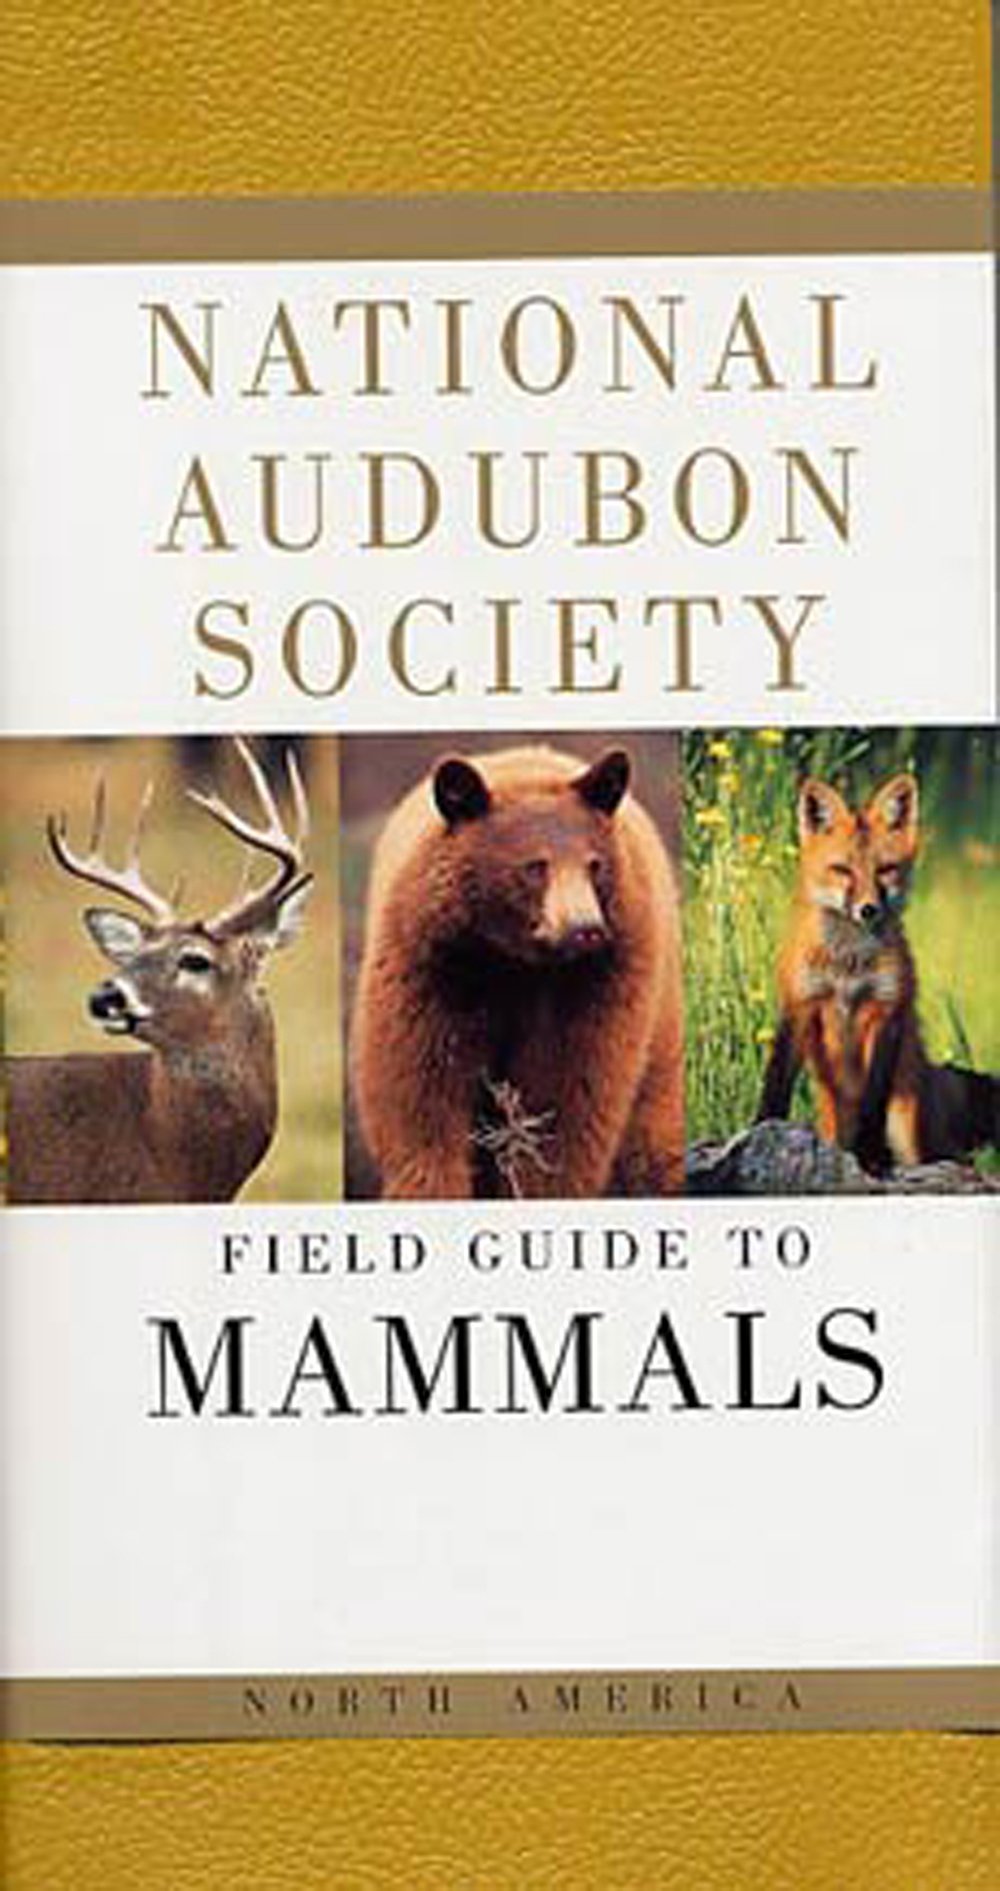 Field Guide to Mammals (National Audubon Society®)